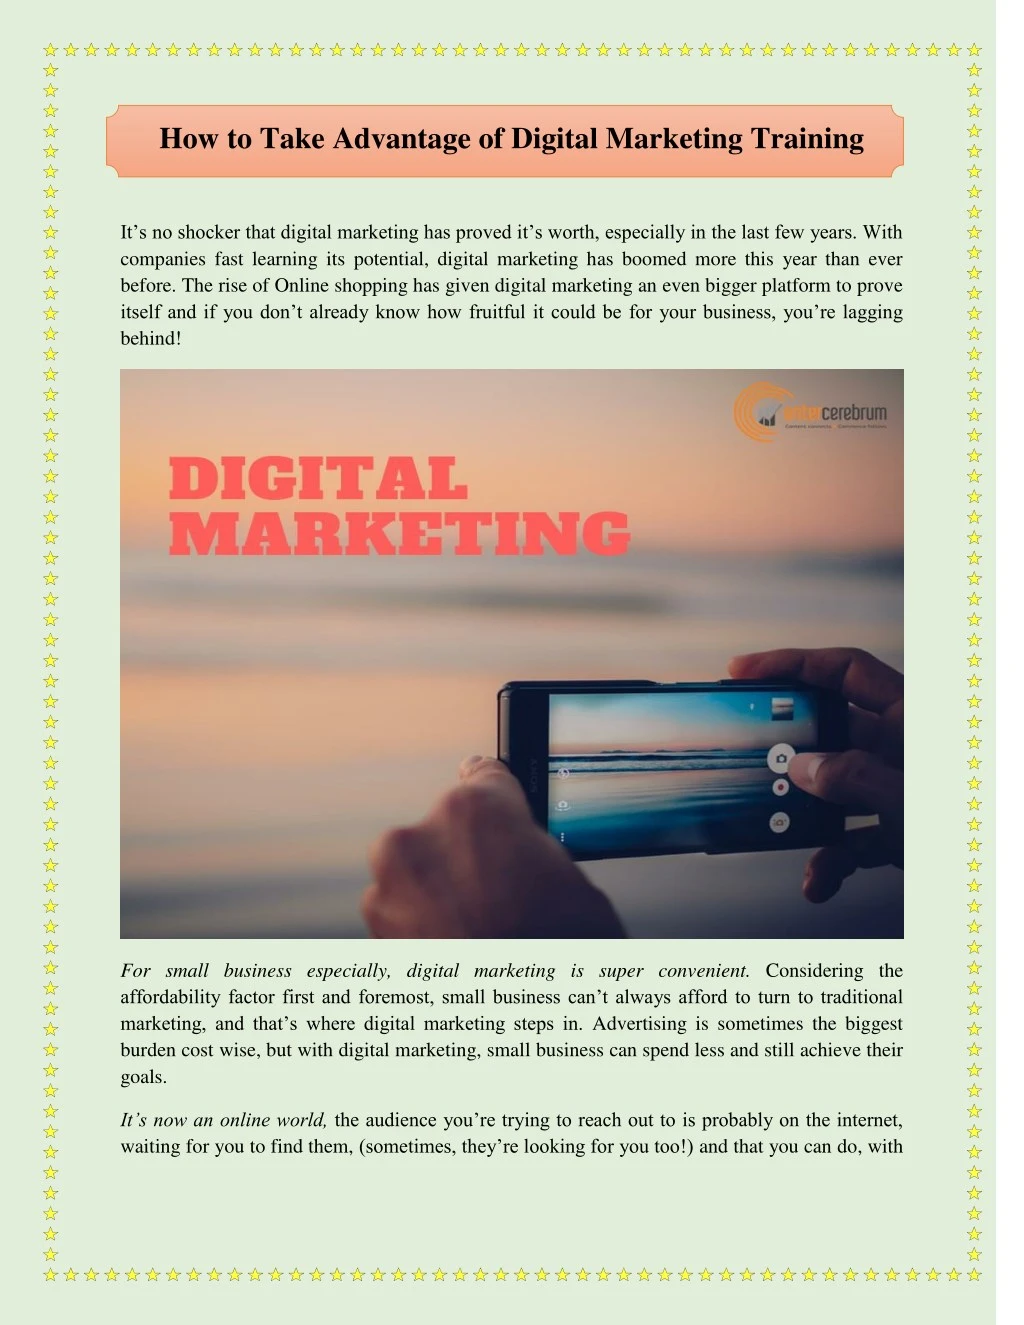 how to take advantage of digital marketing